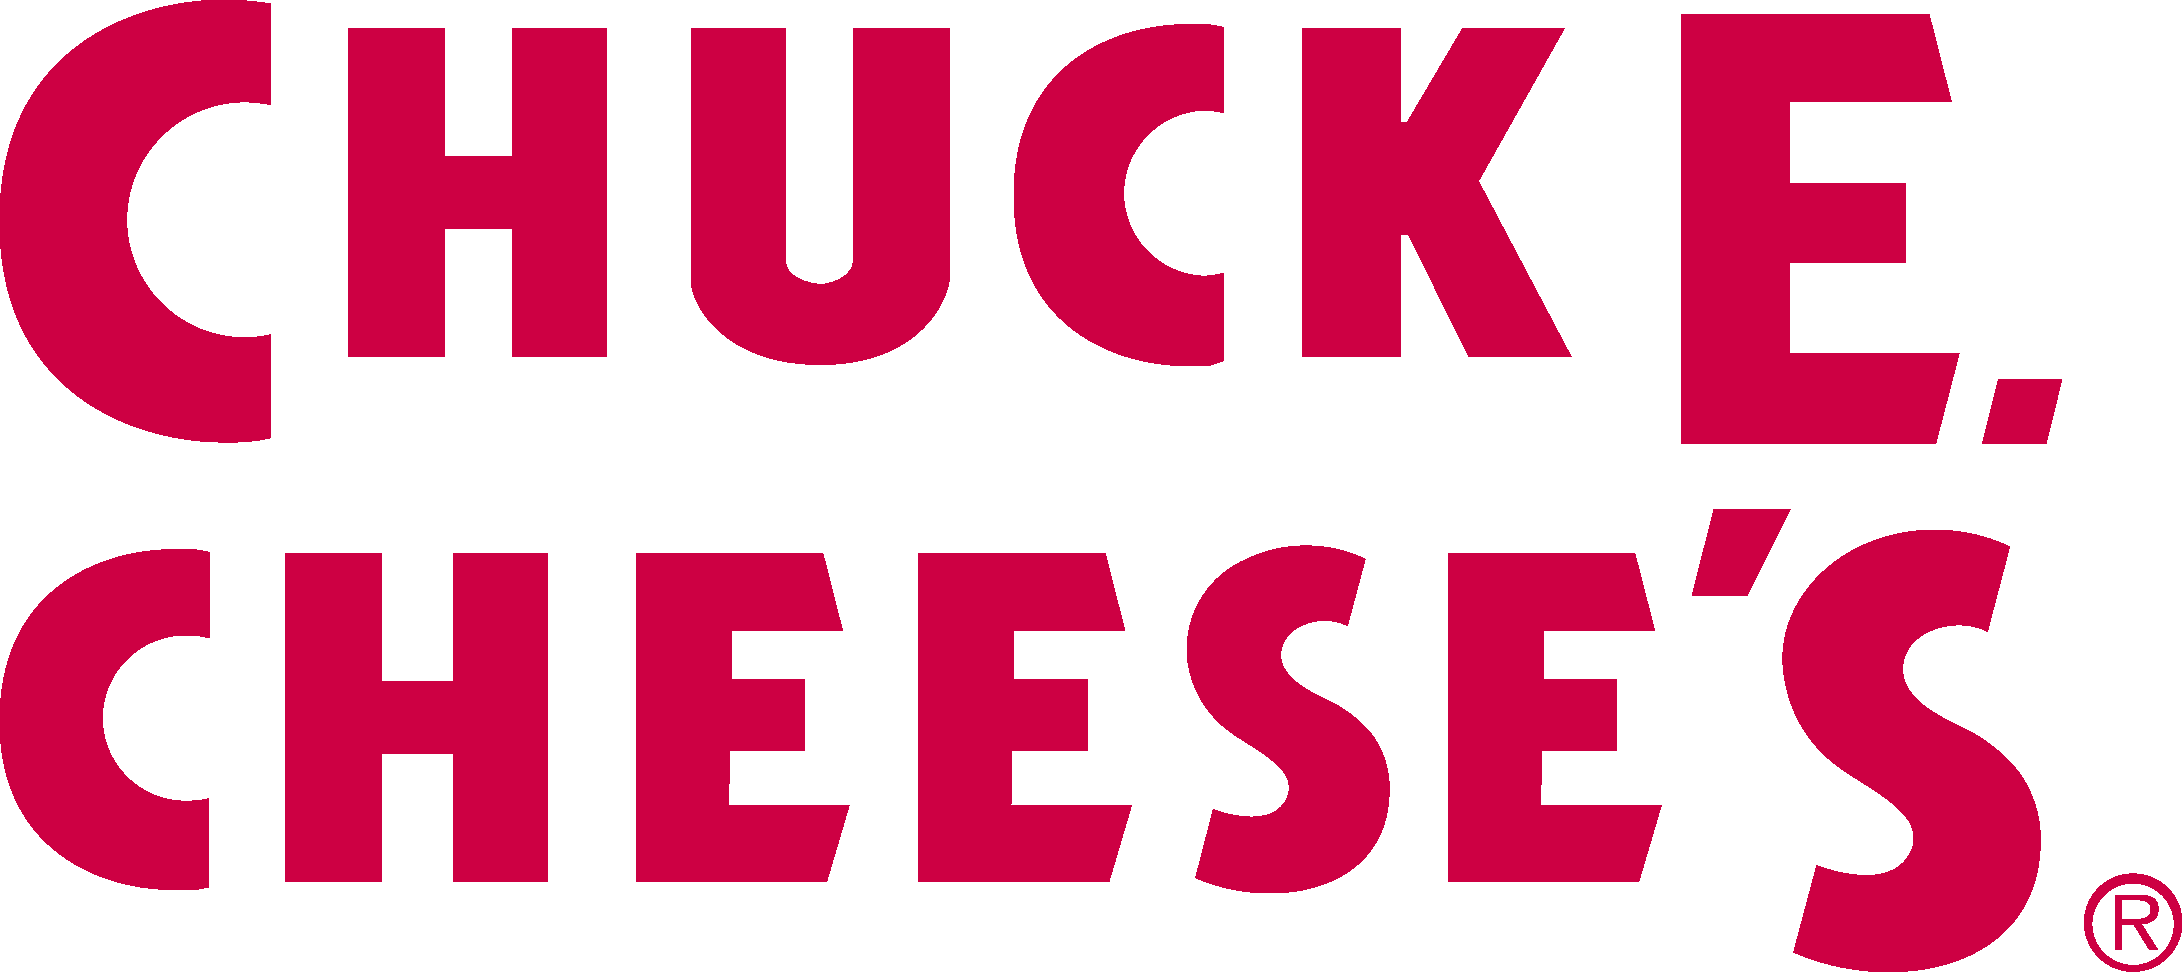 Chuck E. Cheeses Logo png